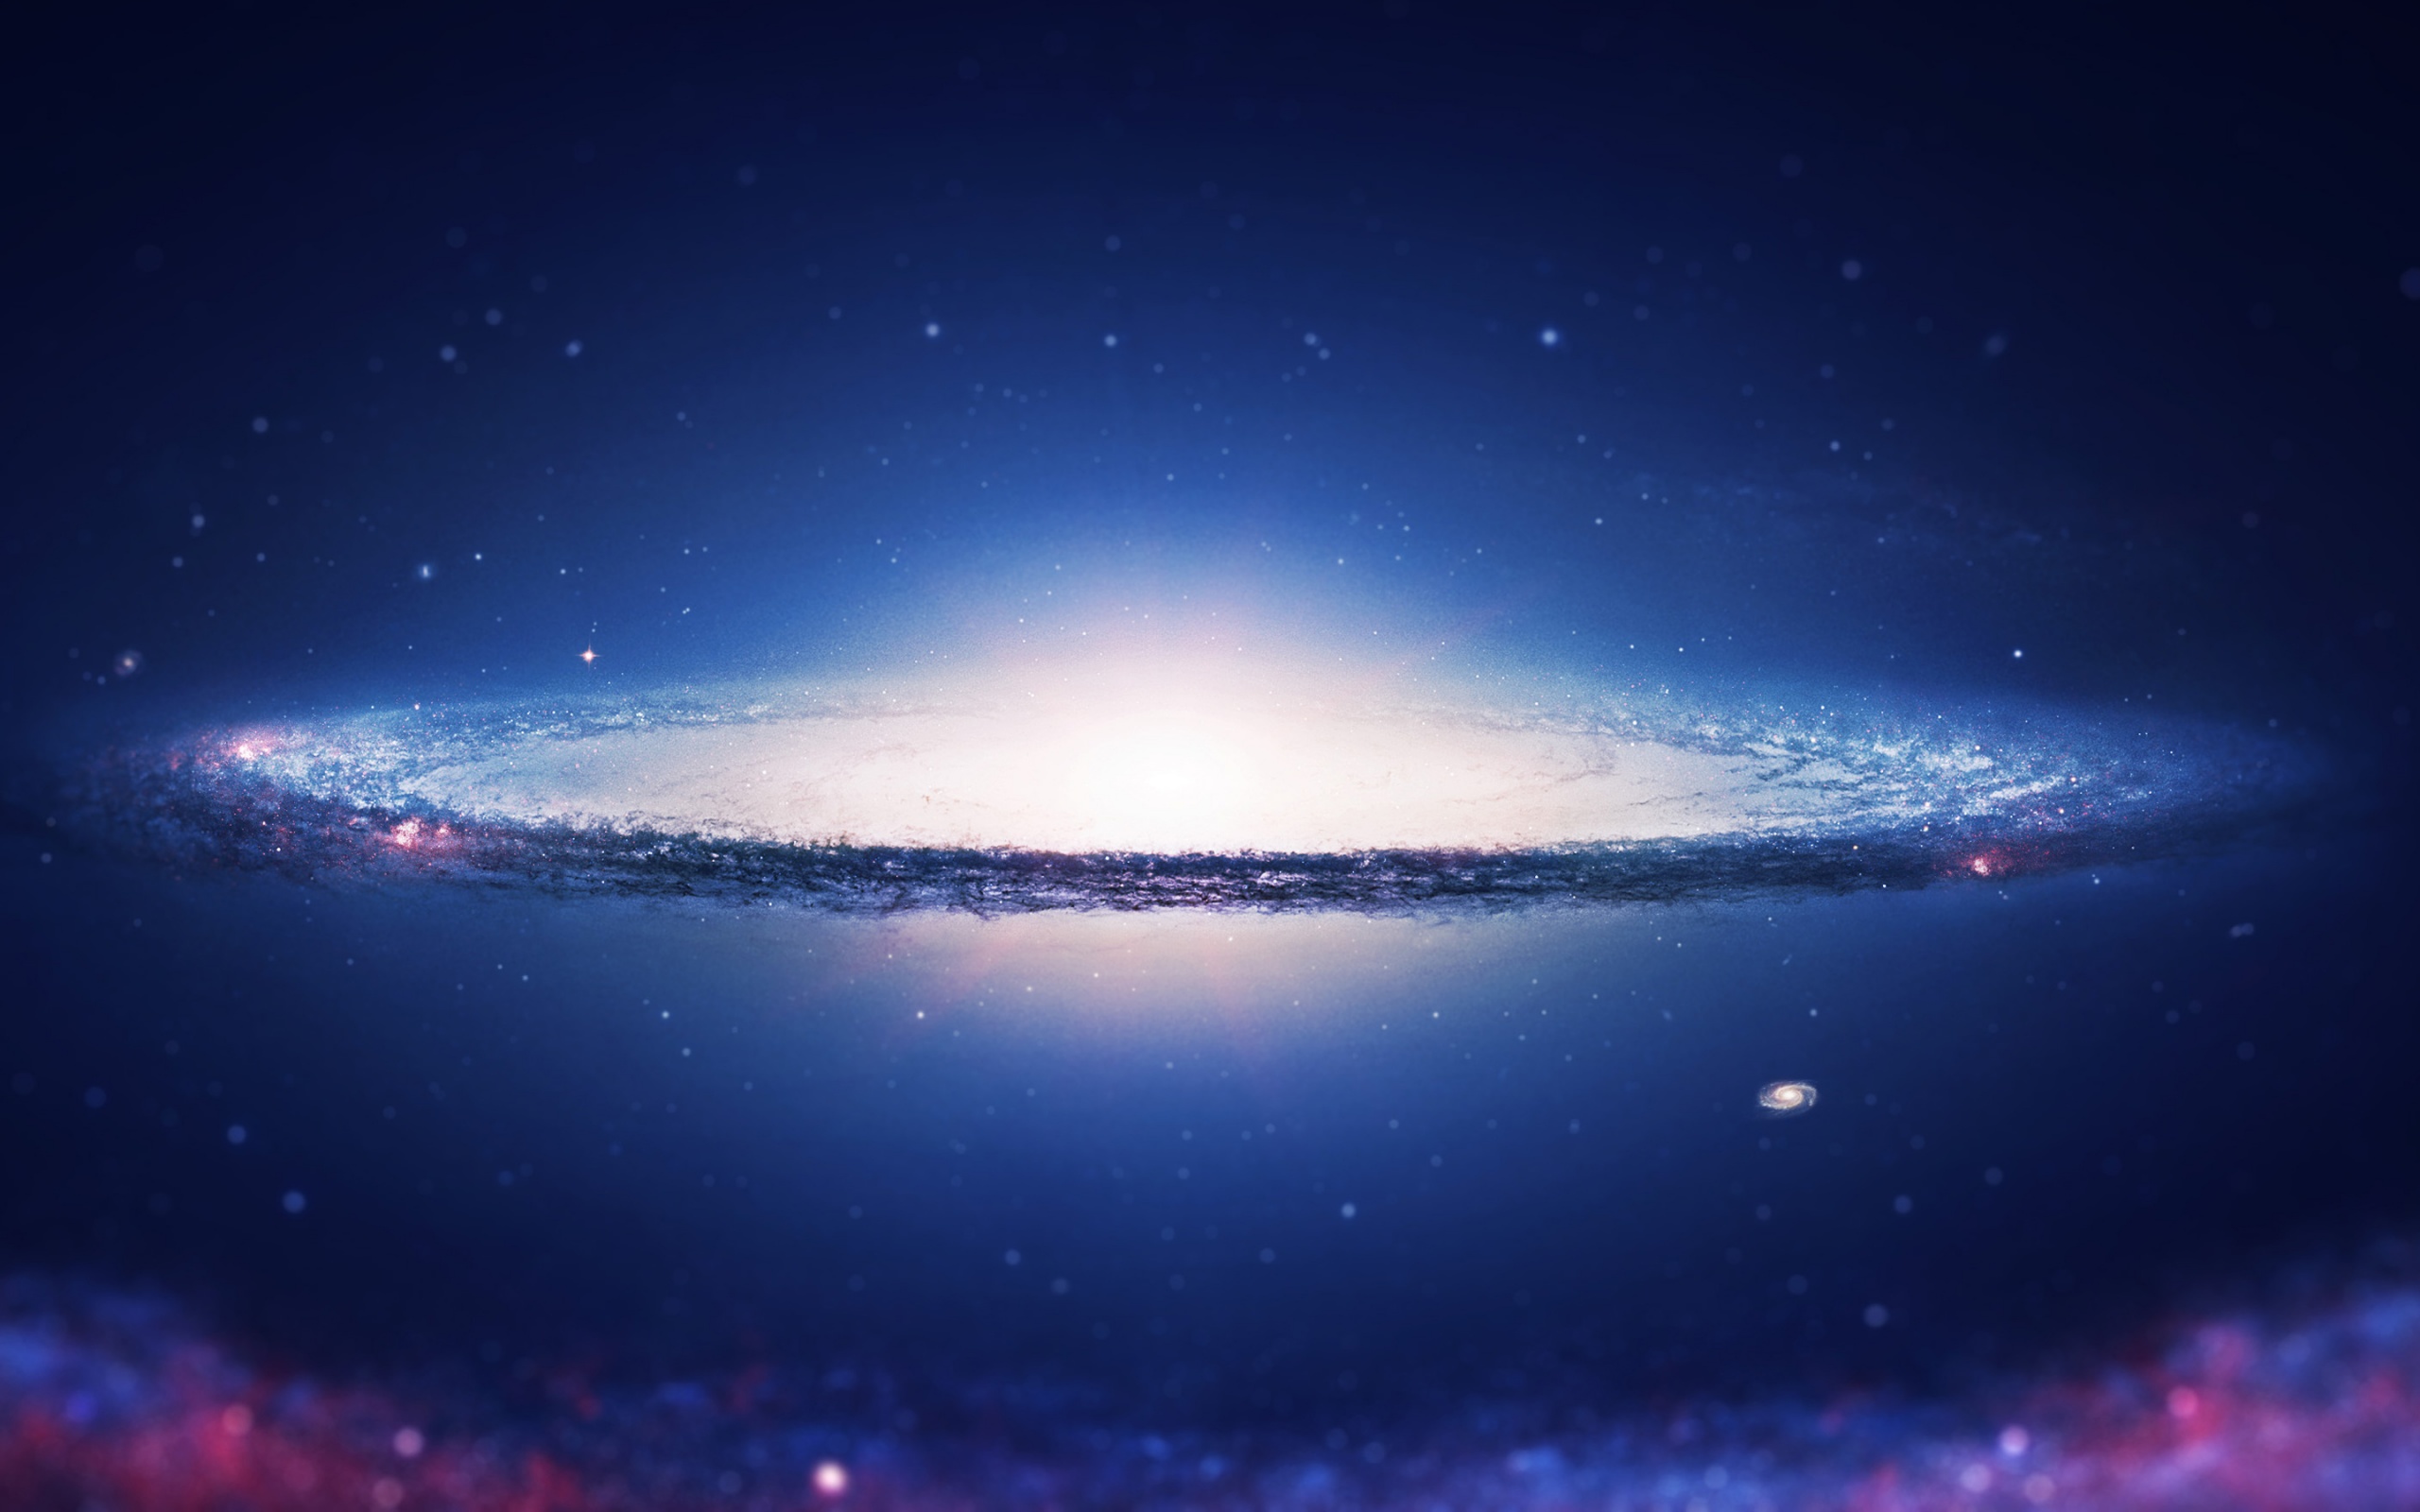 Spiral Galaxy Wallpaper HD